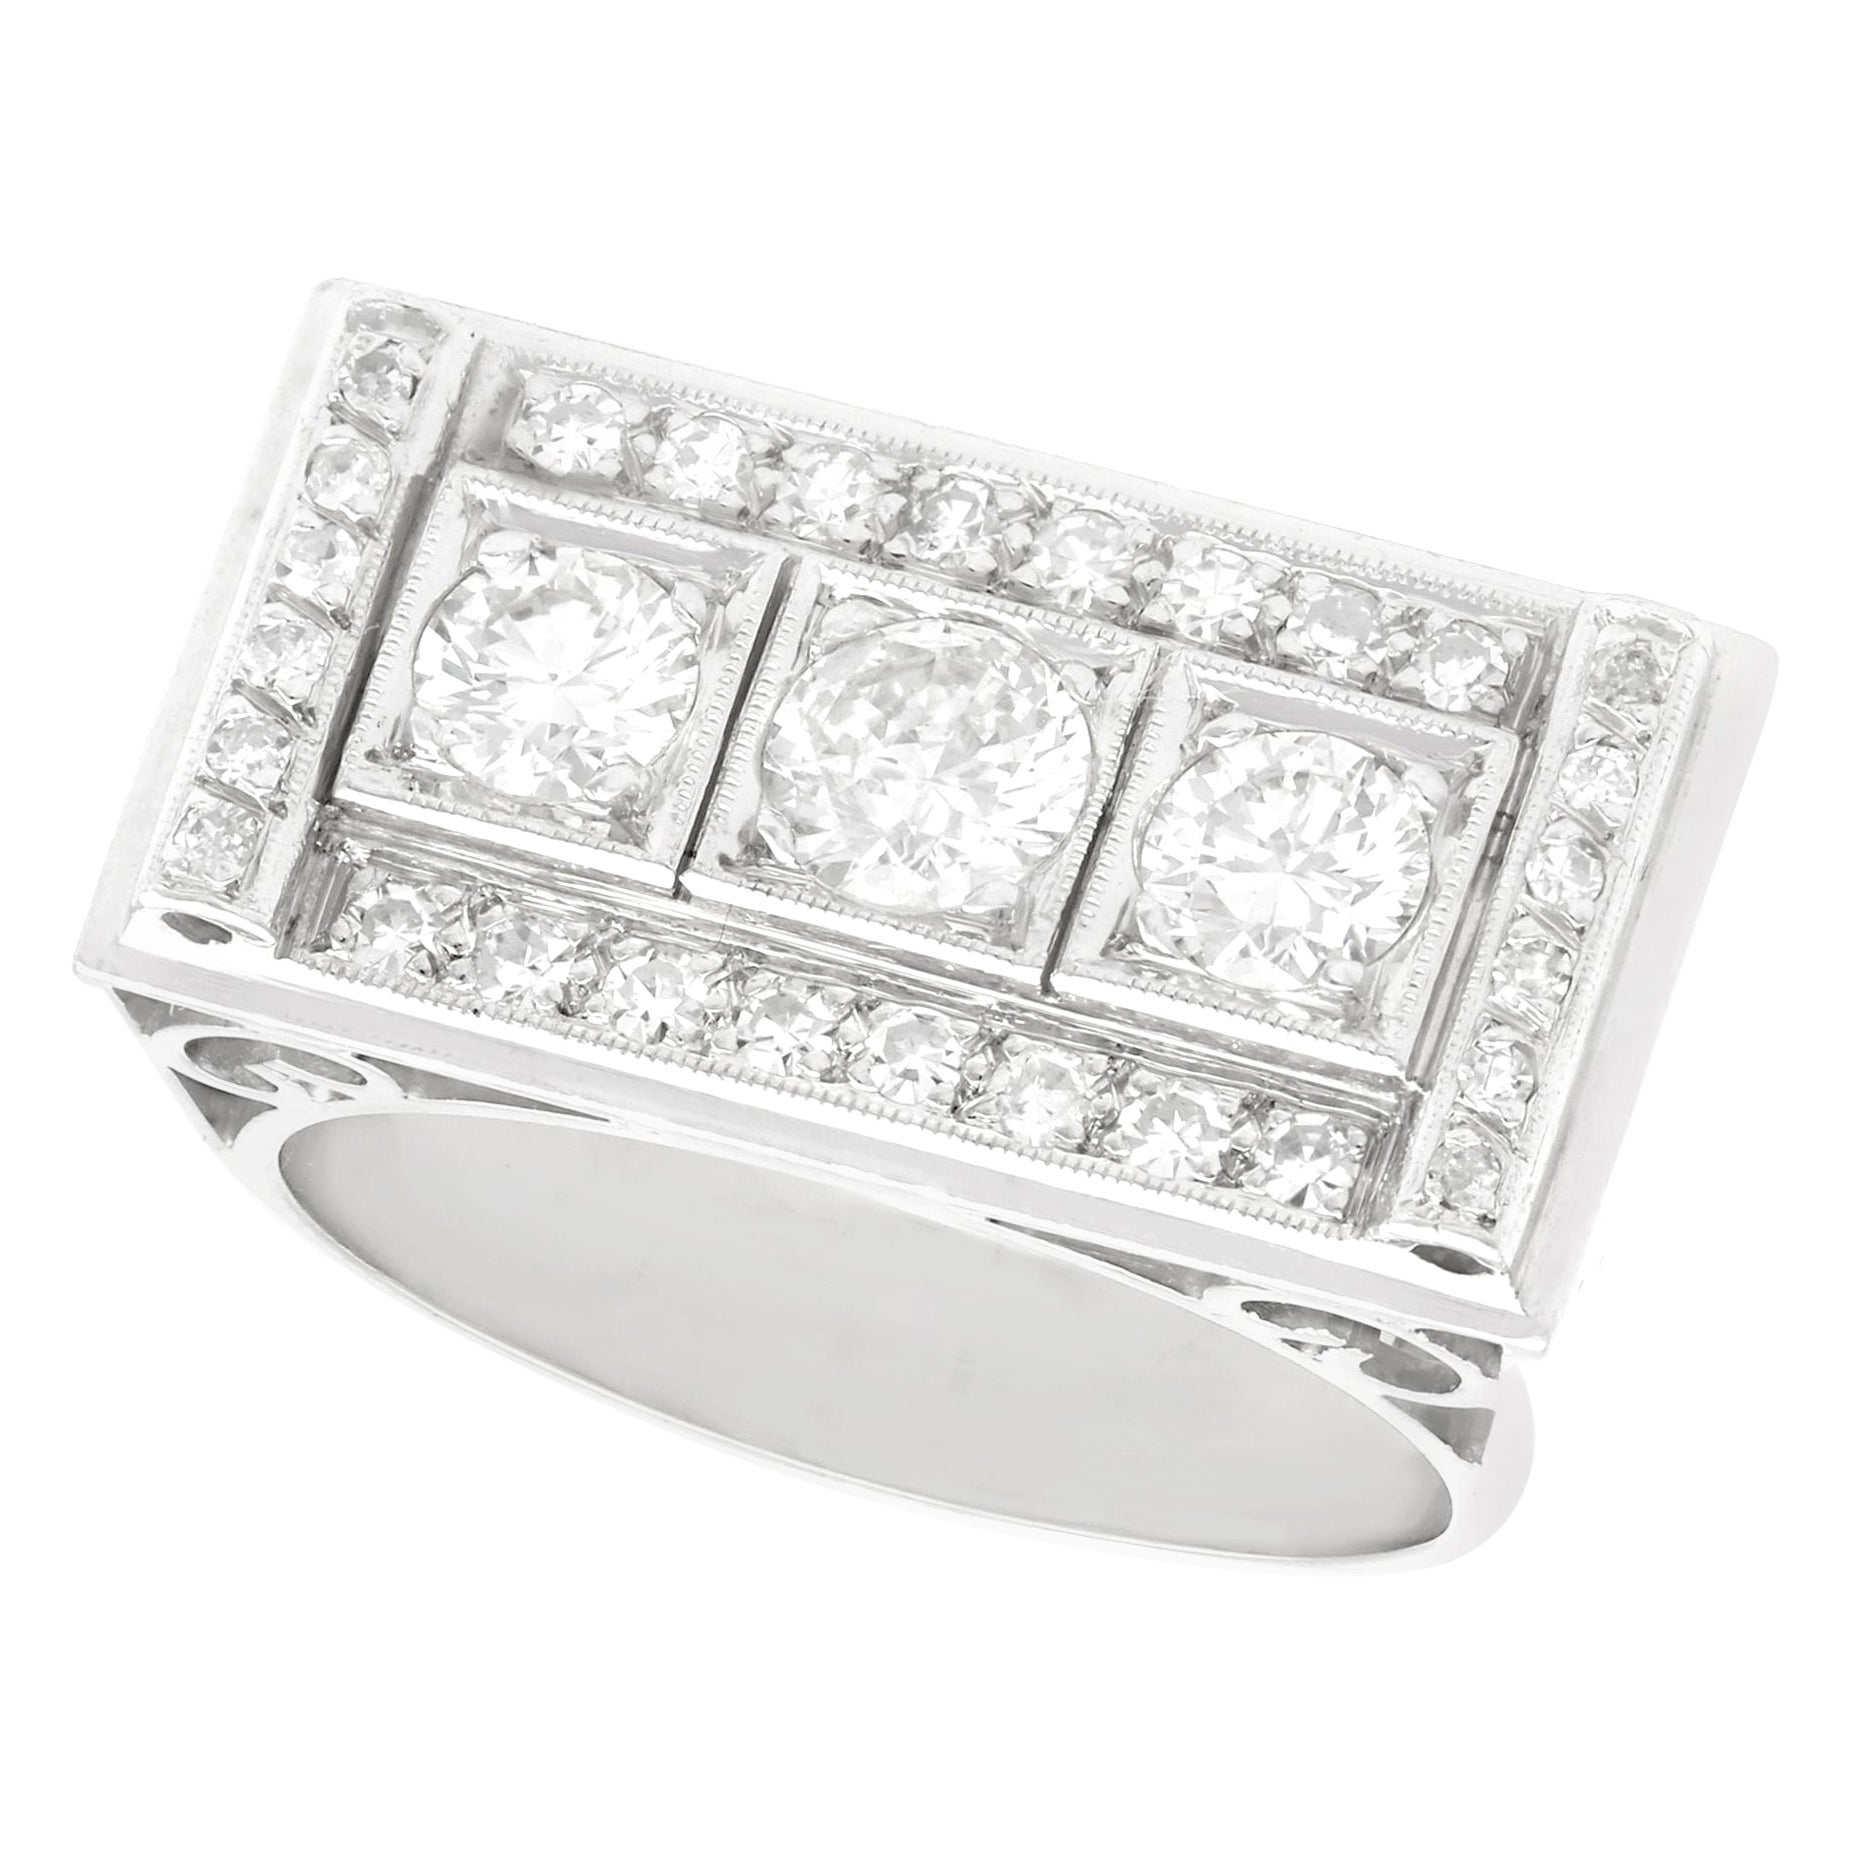 Art Deco Style 1950s 1.89 Carat Diamond and Platinum Cocktail Ring